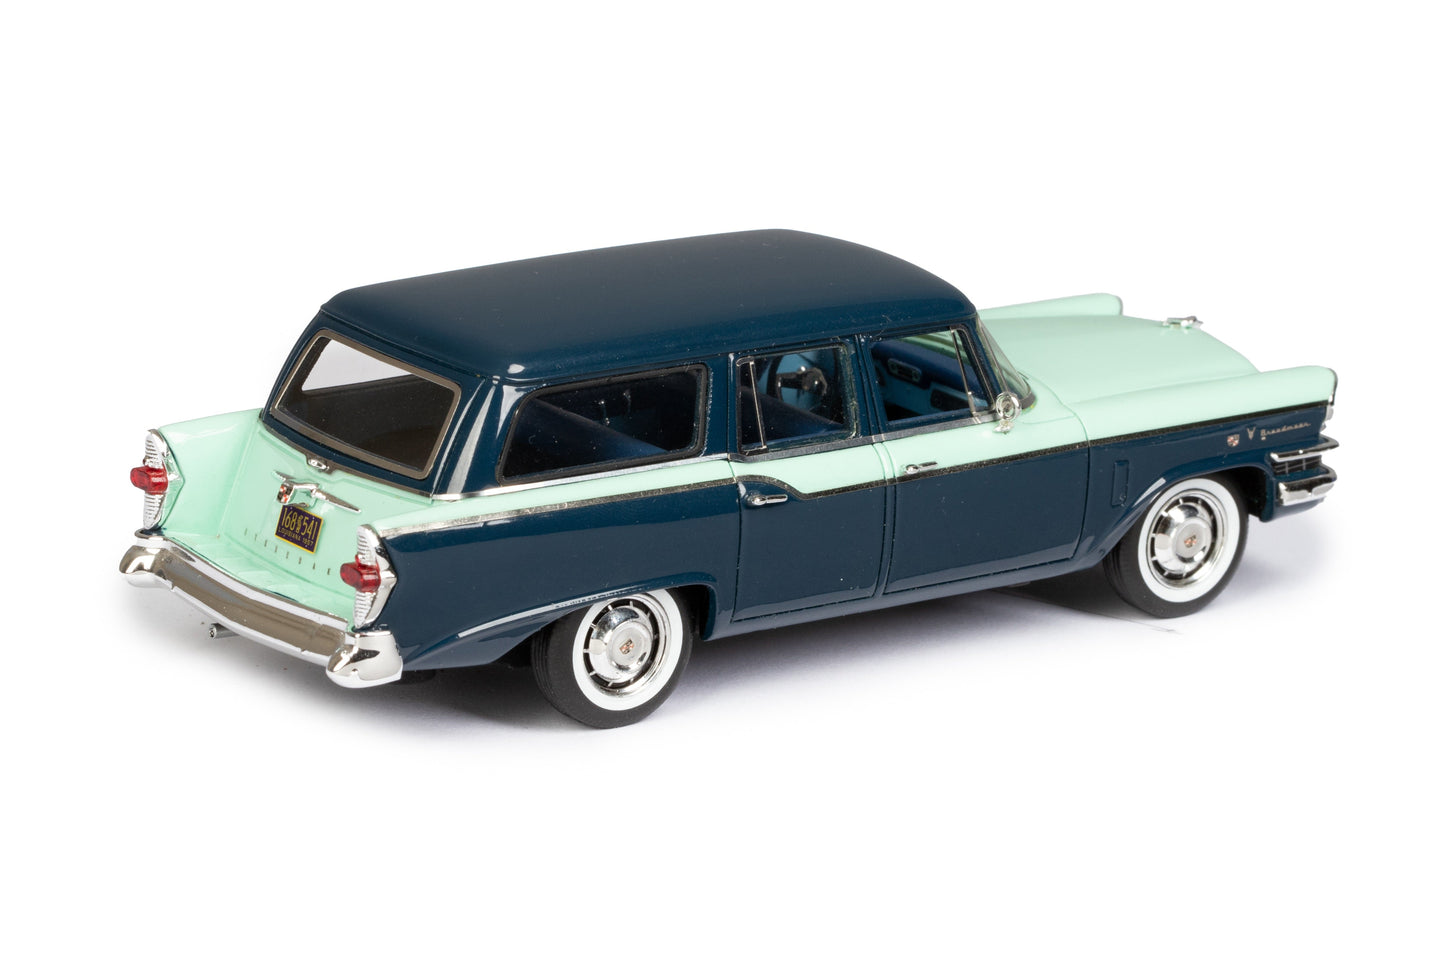 1957 Studebaker Commander Provincial Wagon - Blue/Green (Pre-Order)